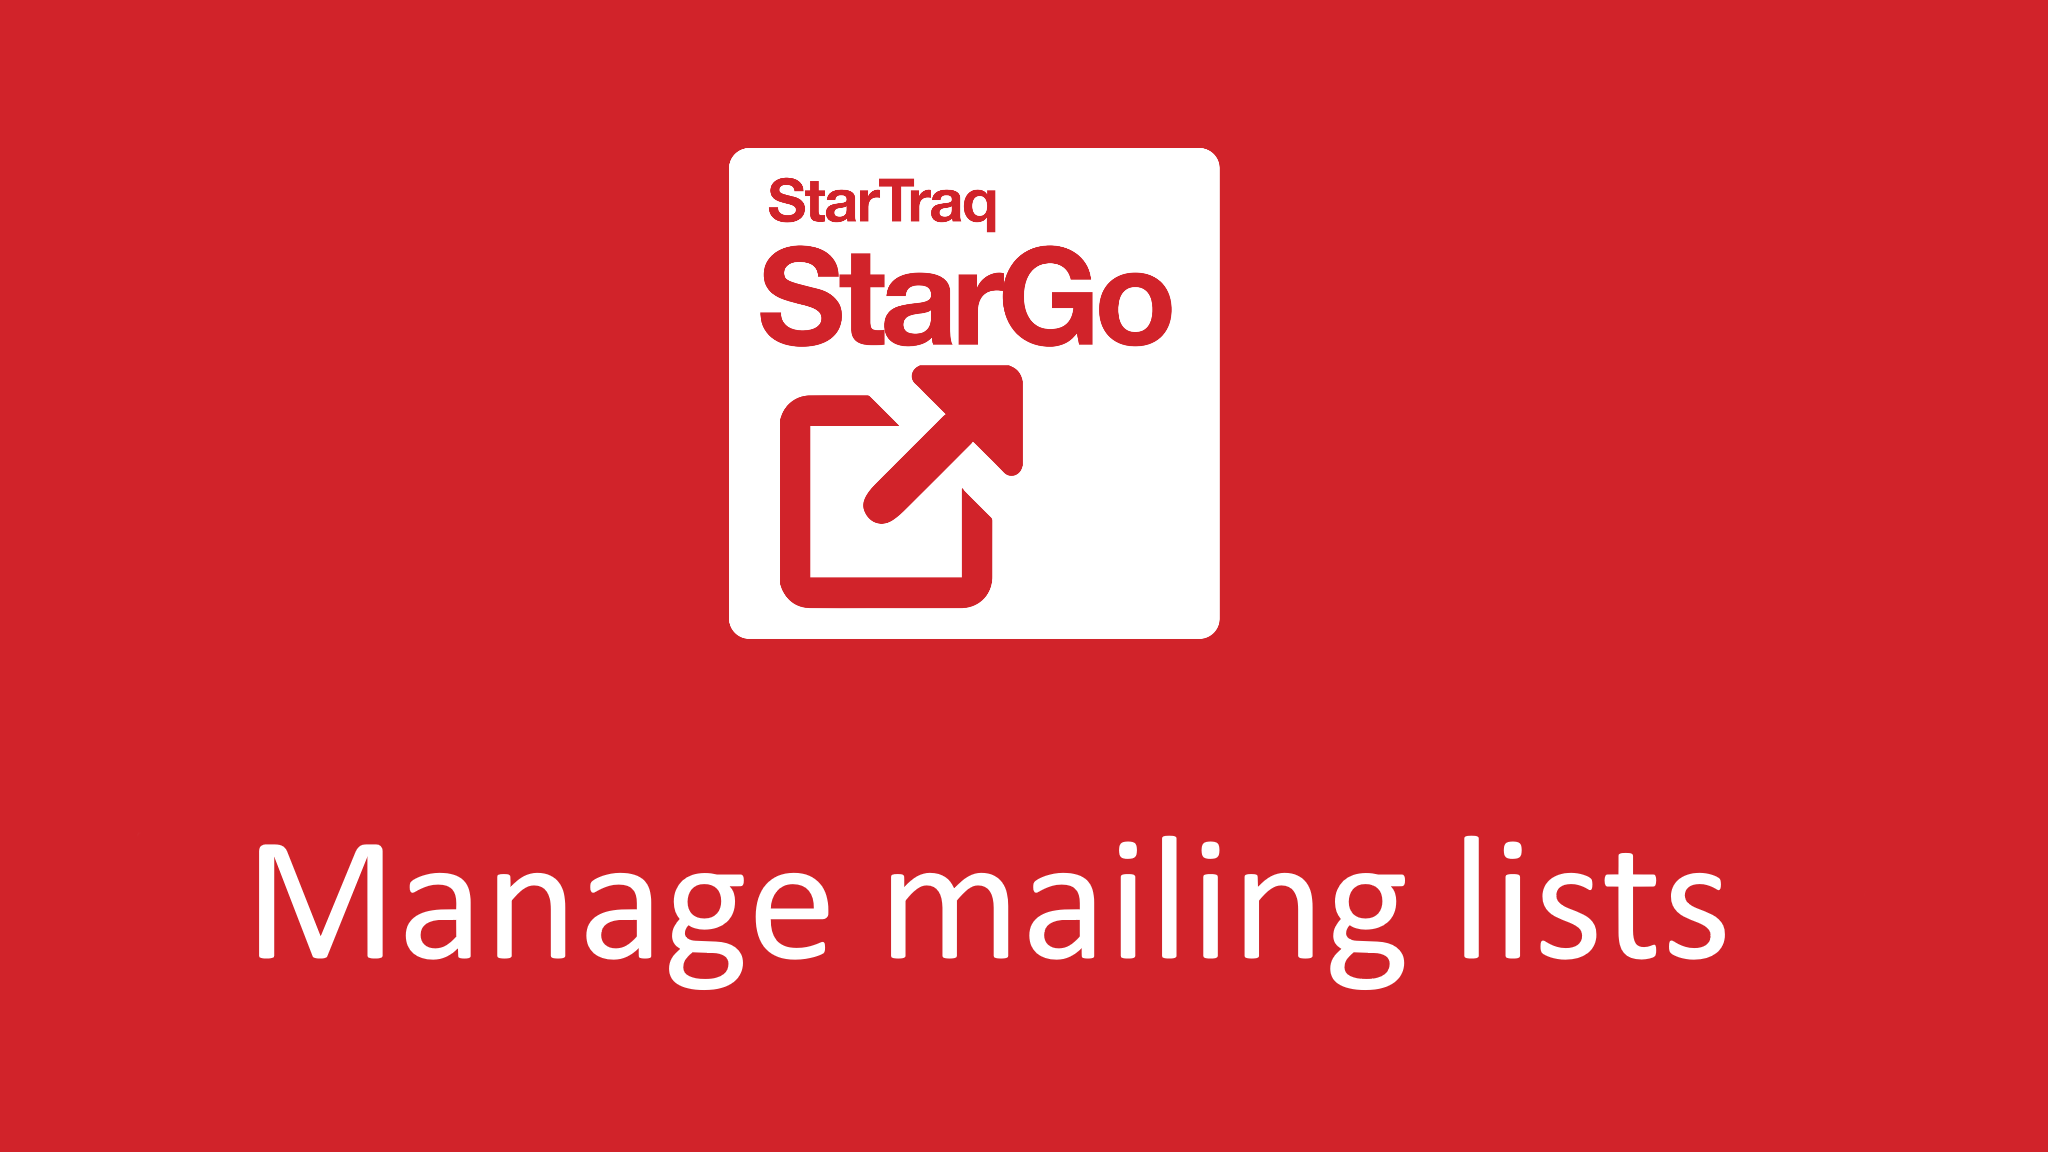 Manage mailing lists (01:20)